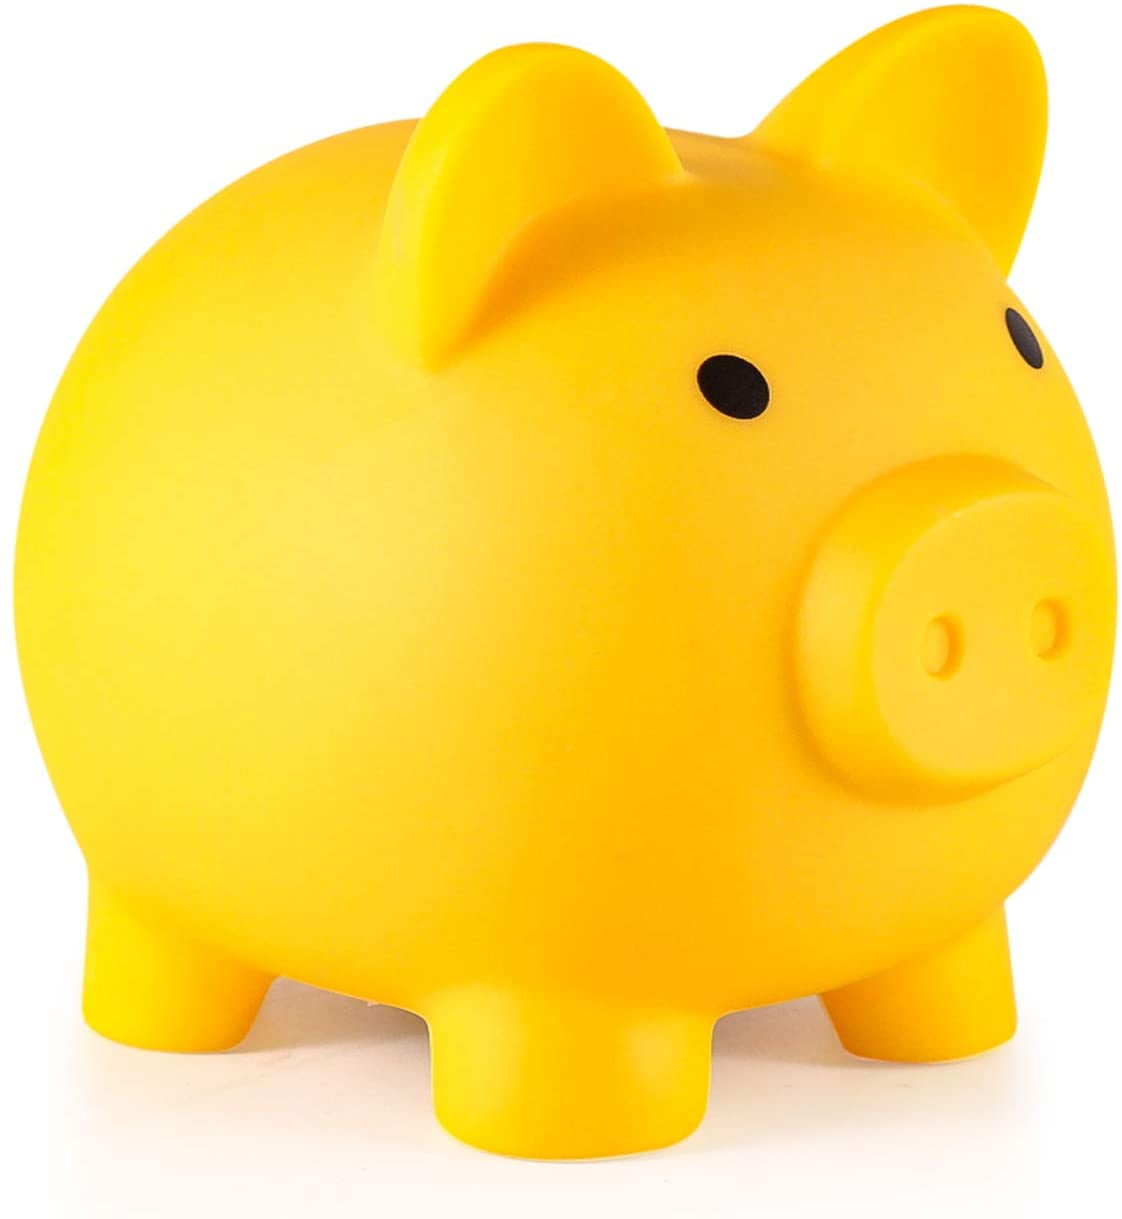 Mini Yellow Plastic Pig "Piggy" Banks Lot of 10 Pieces 